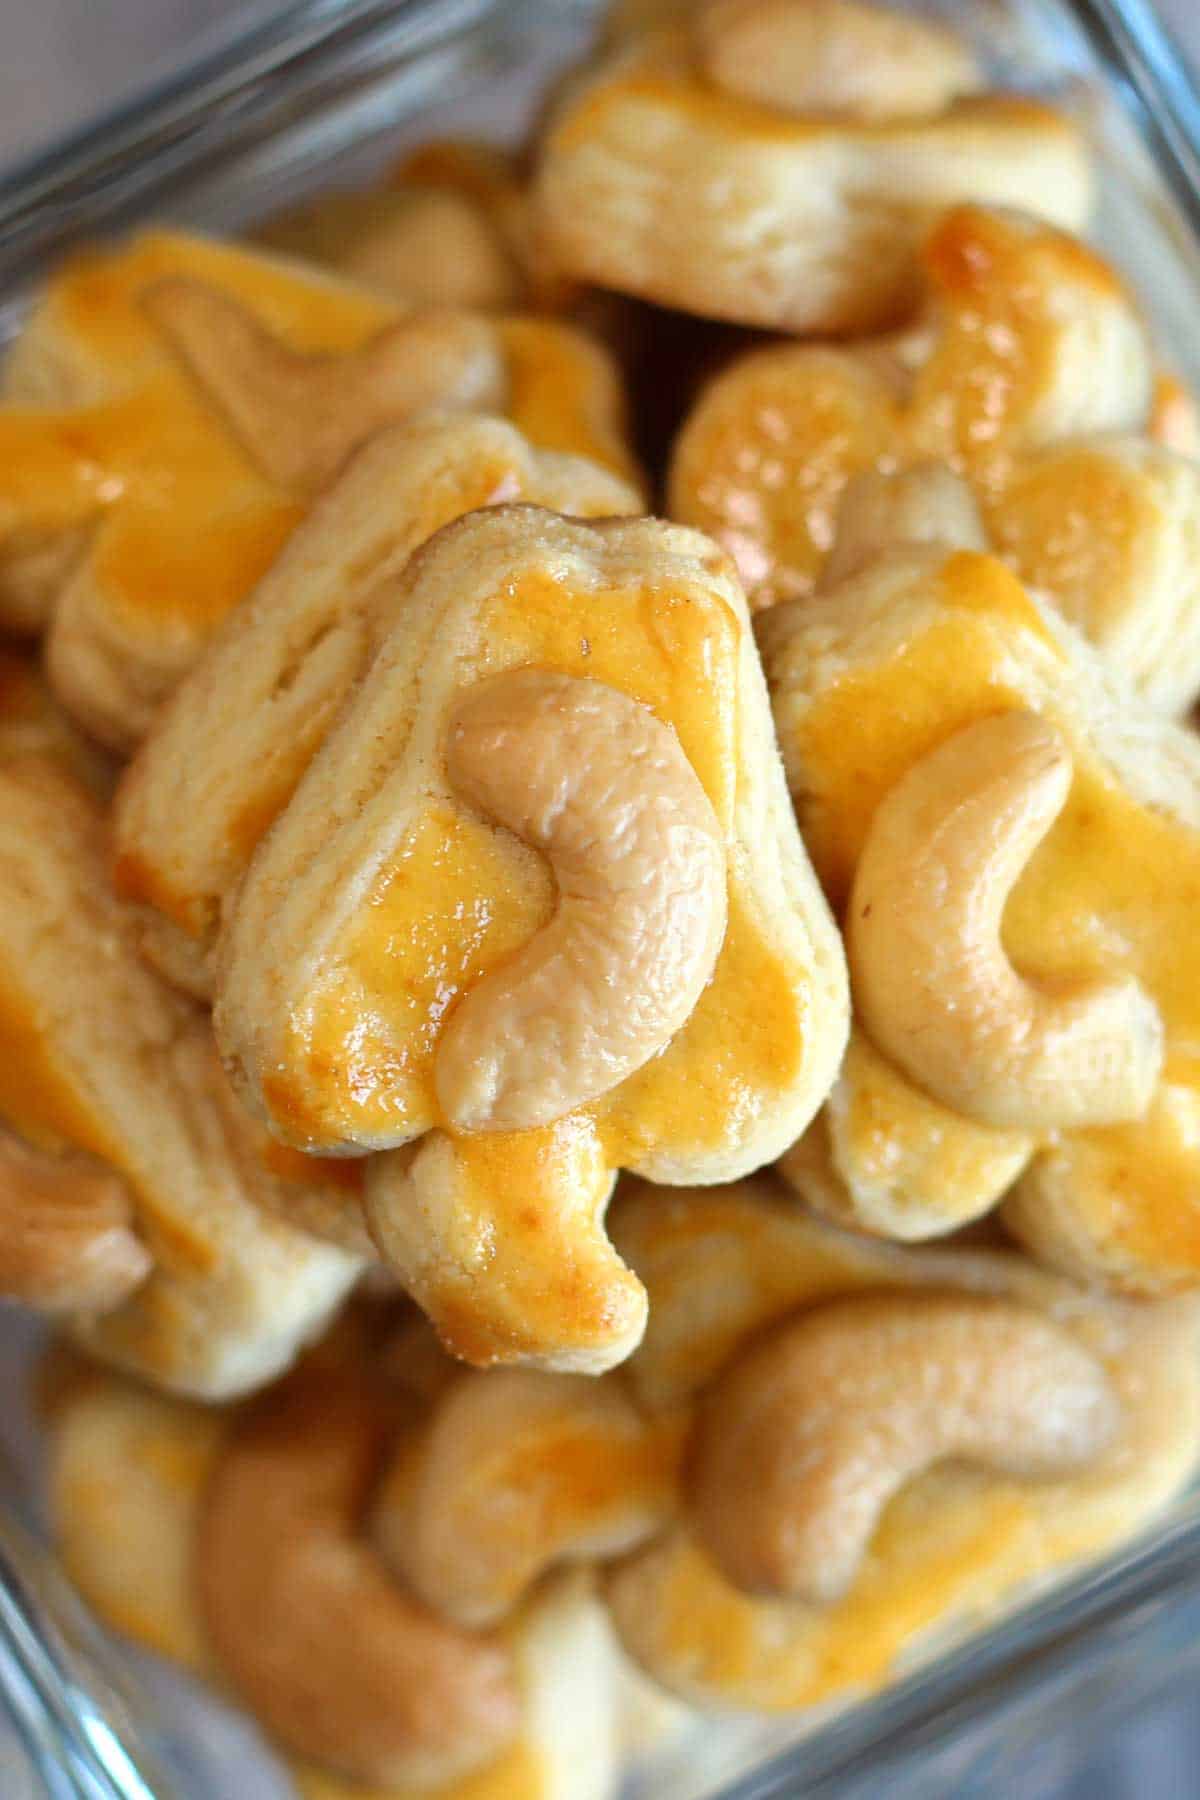 Cashew nut cookies in a jar.